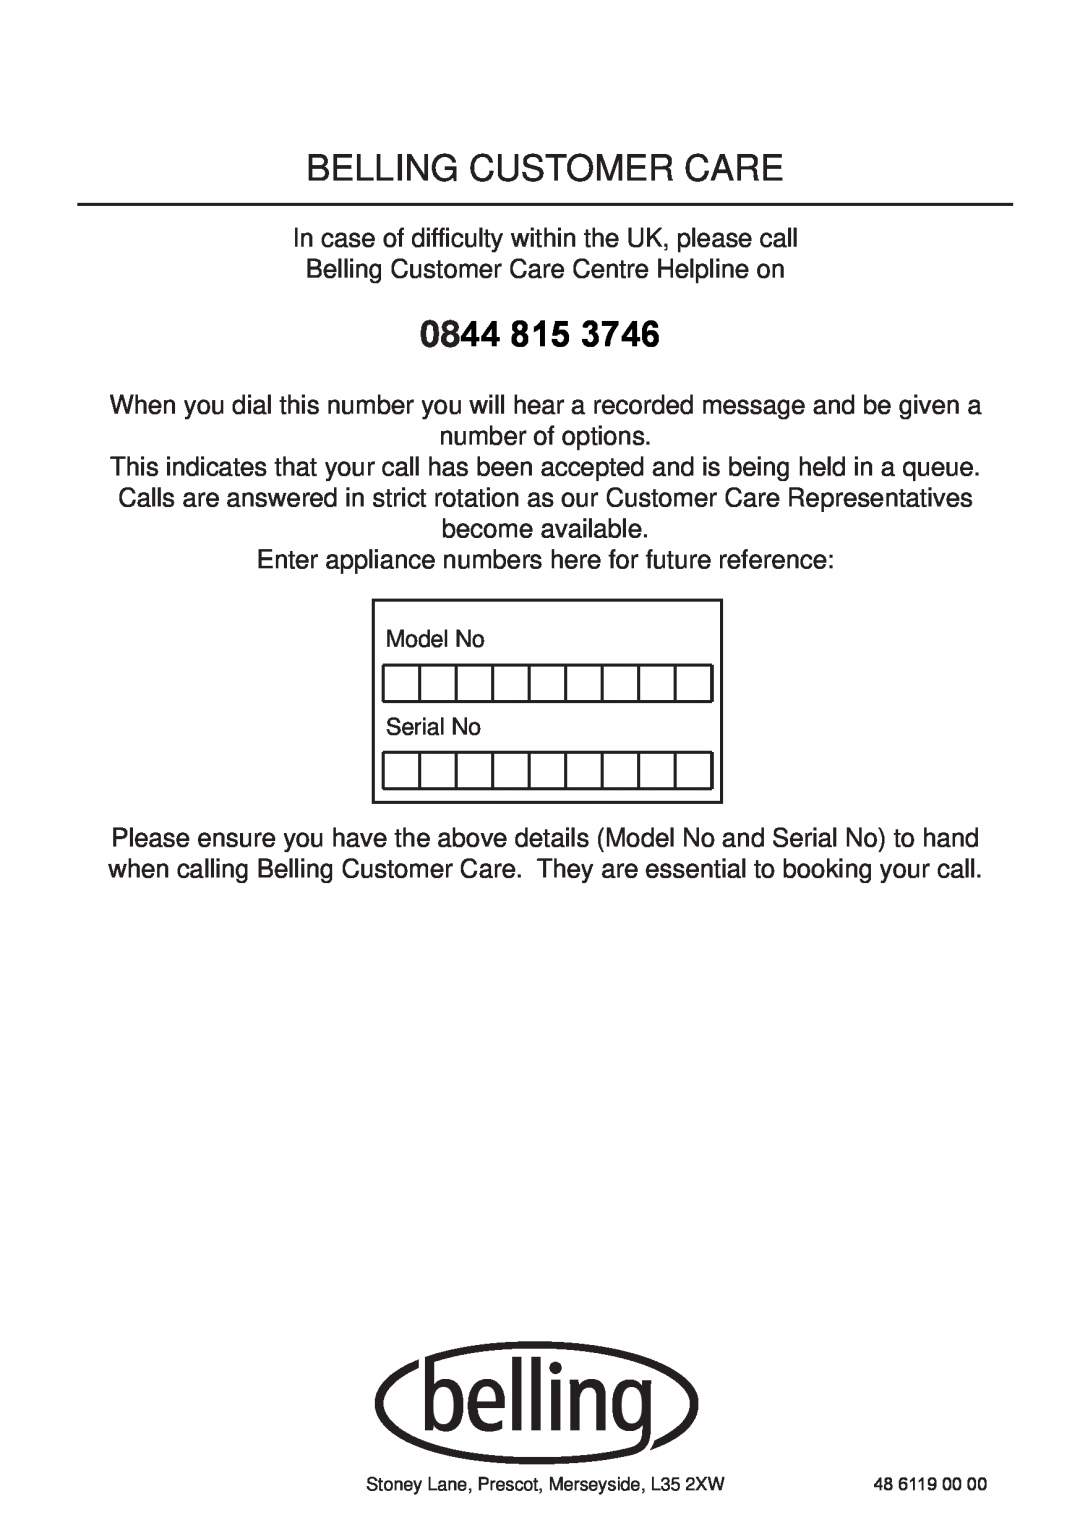 Glen Dimplex Home Appliances Ltd BE817 manual Belling Customer Care, 0844 815 